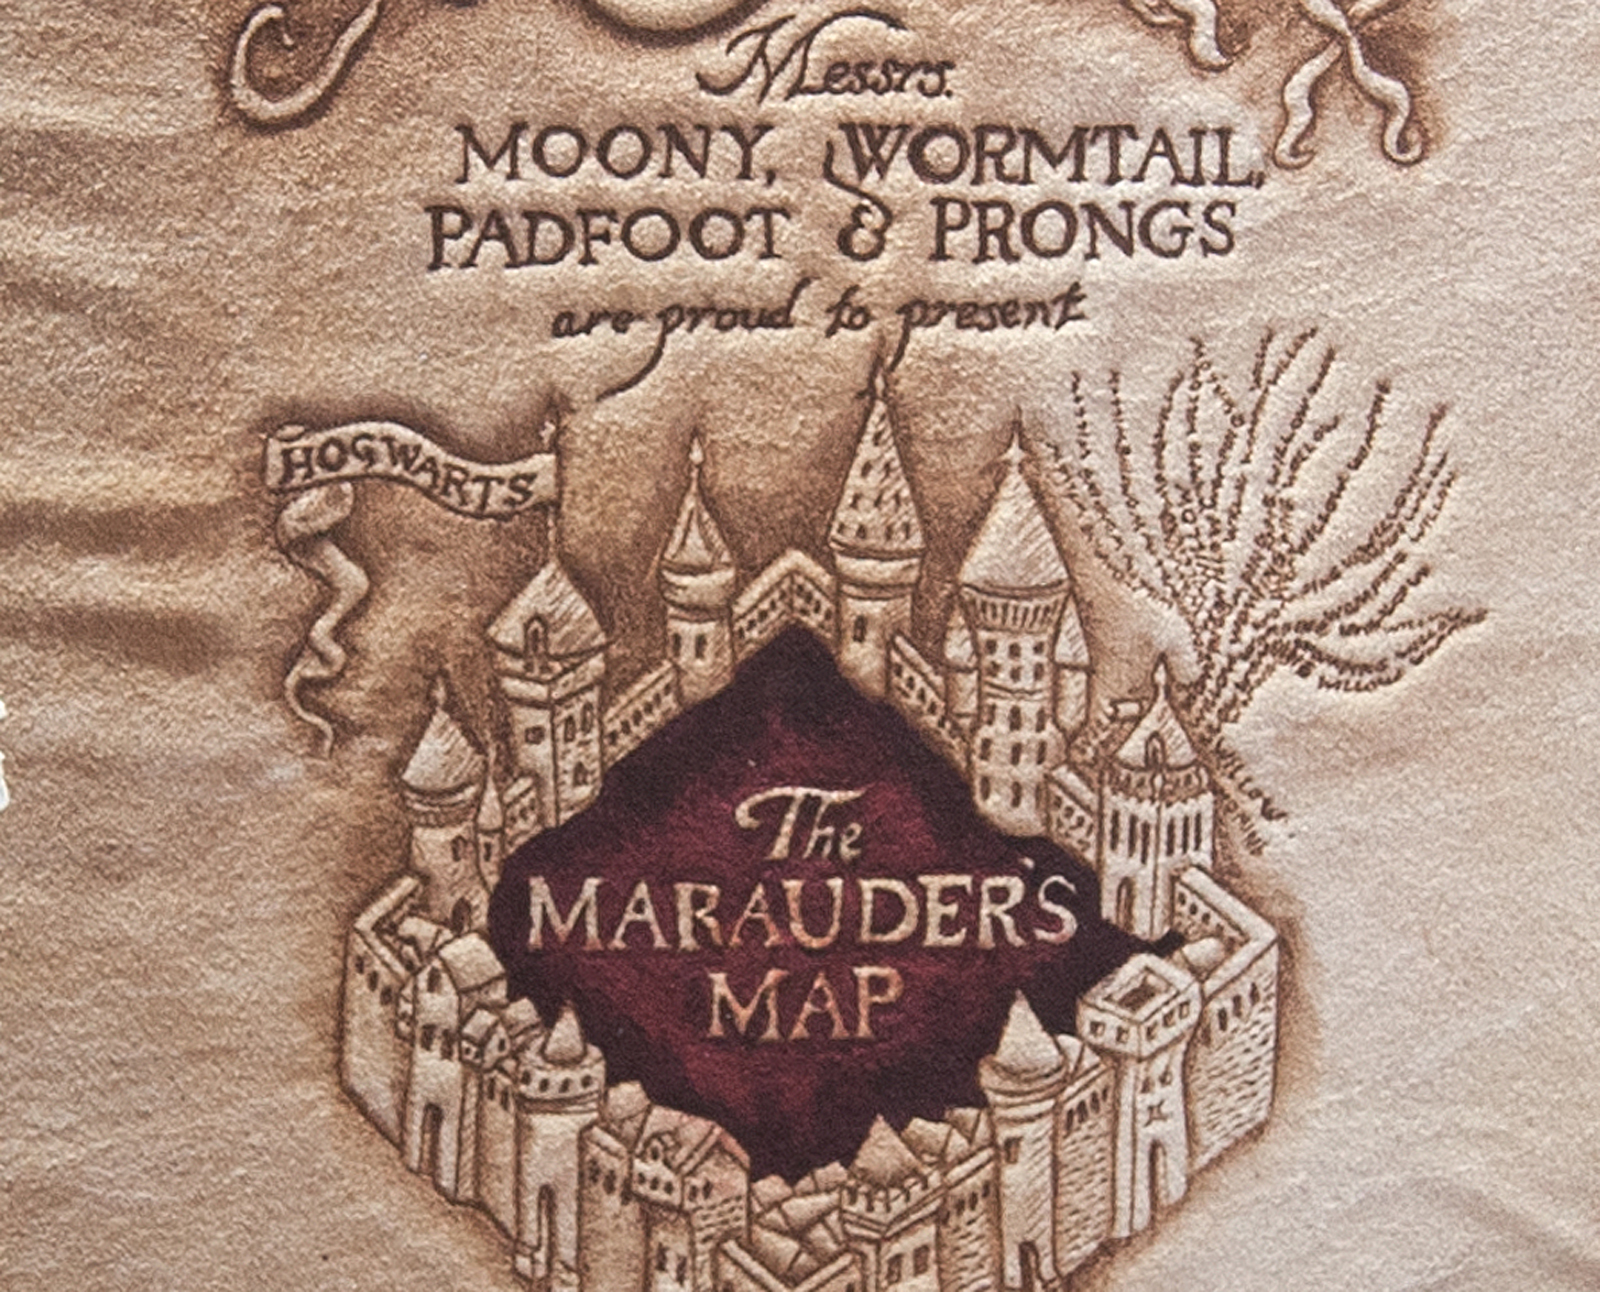 Marauders Map Original Drawing (DIGITAL)